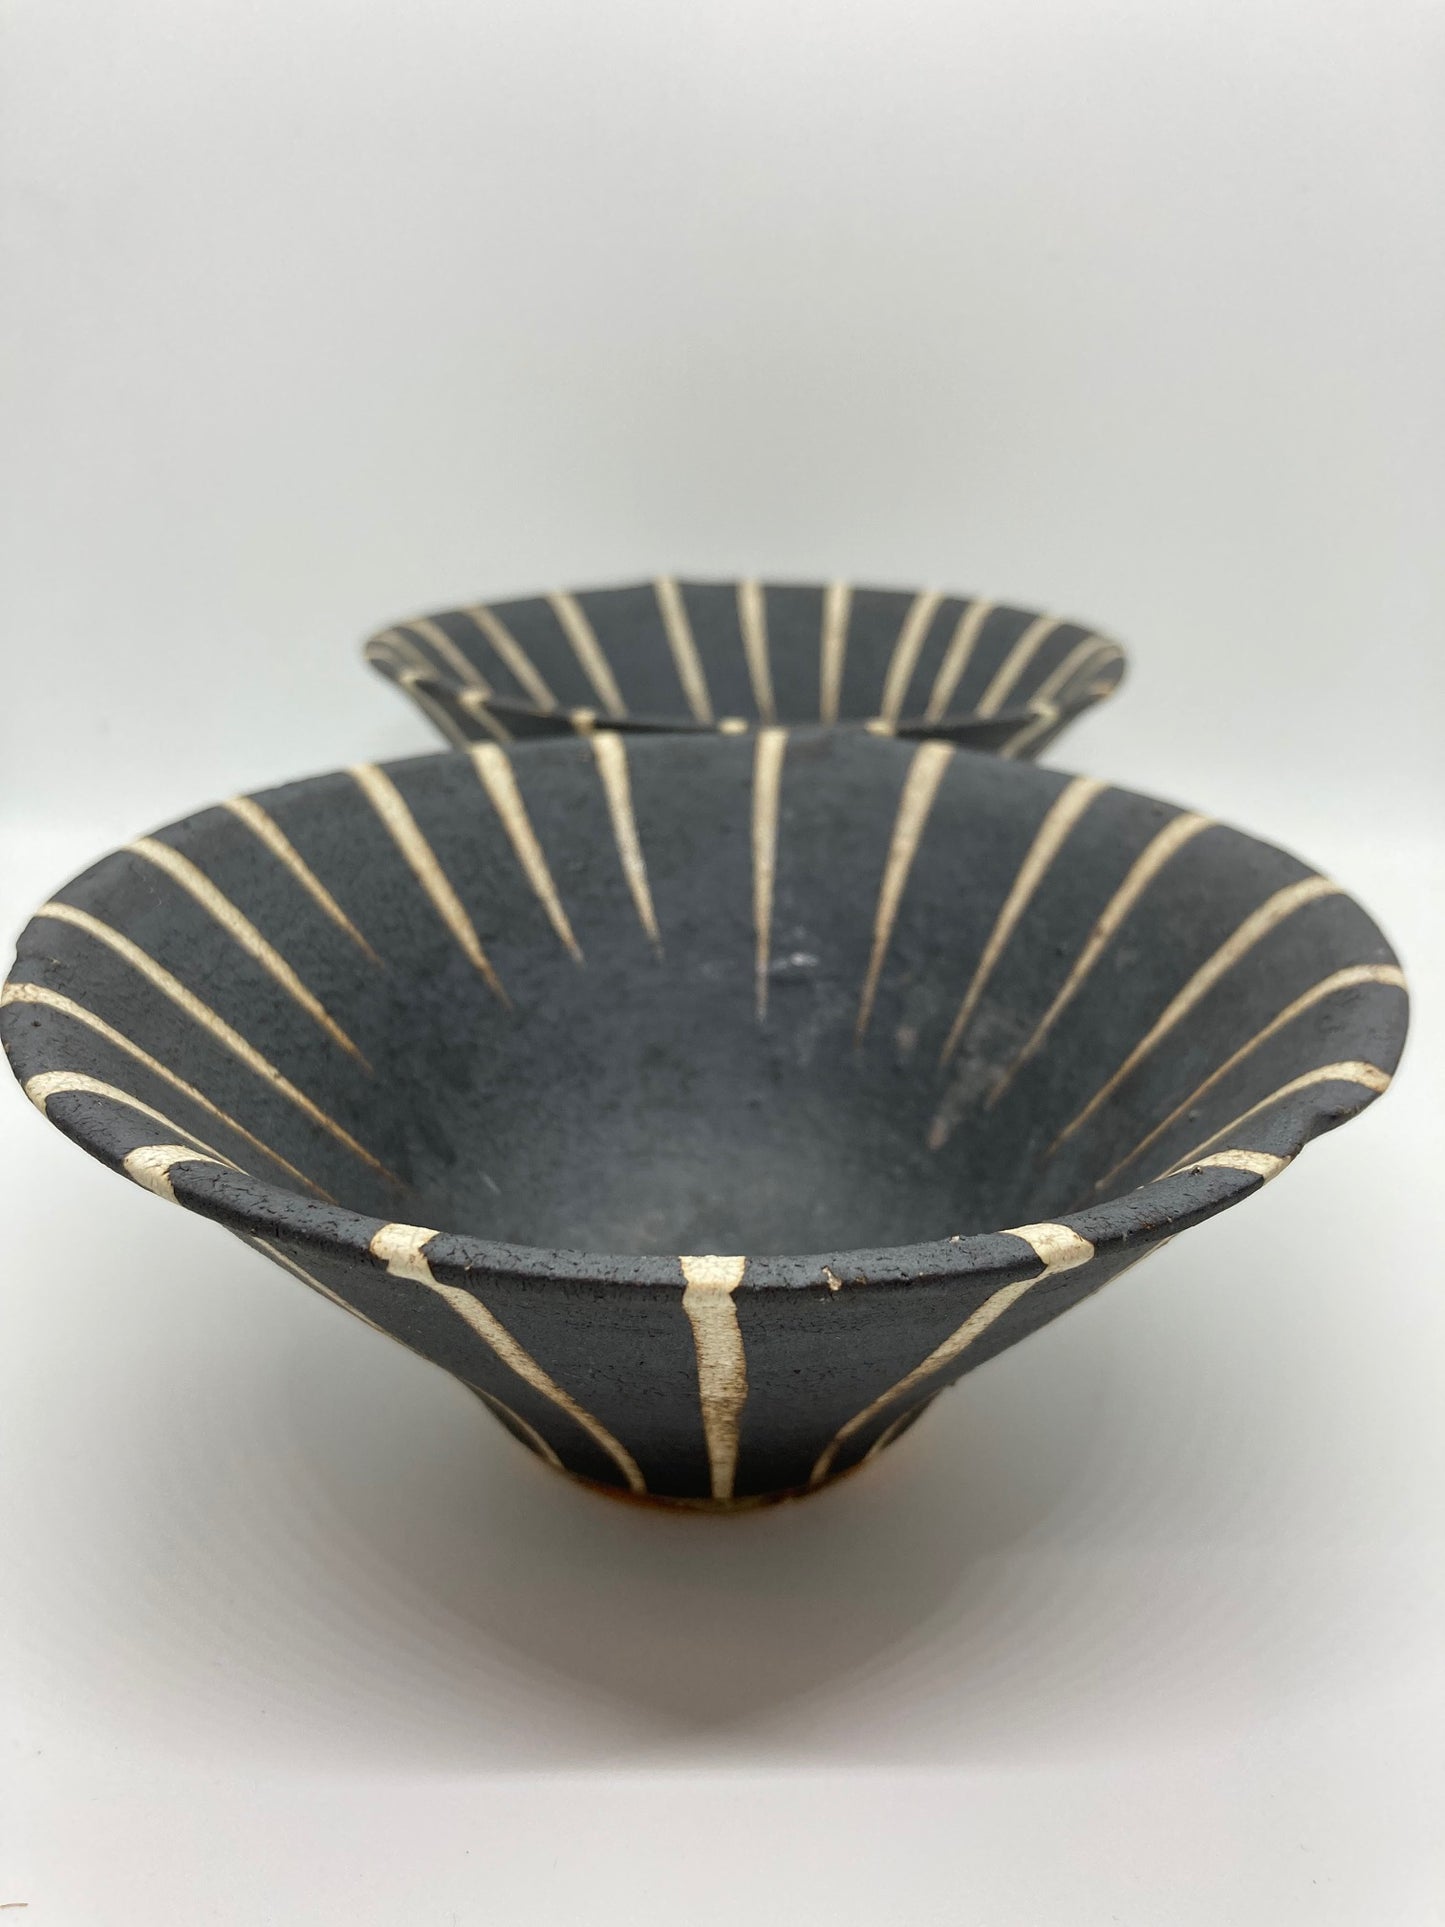 【SALE】Mino-Yaki Bowl 15.5cm/6in (di) Modern Japanese 2-Bowl Set